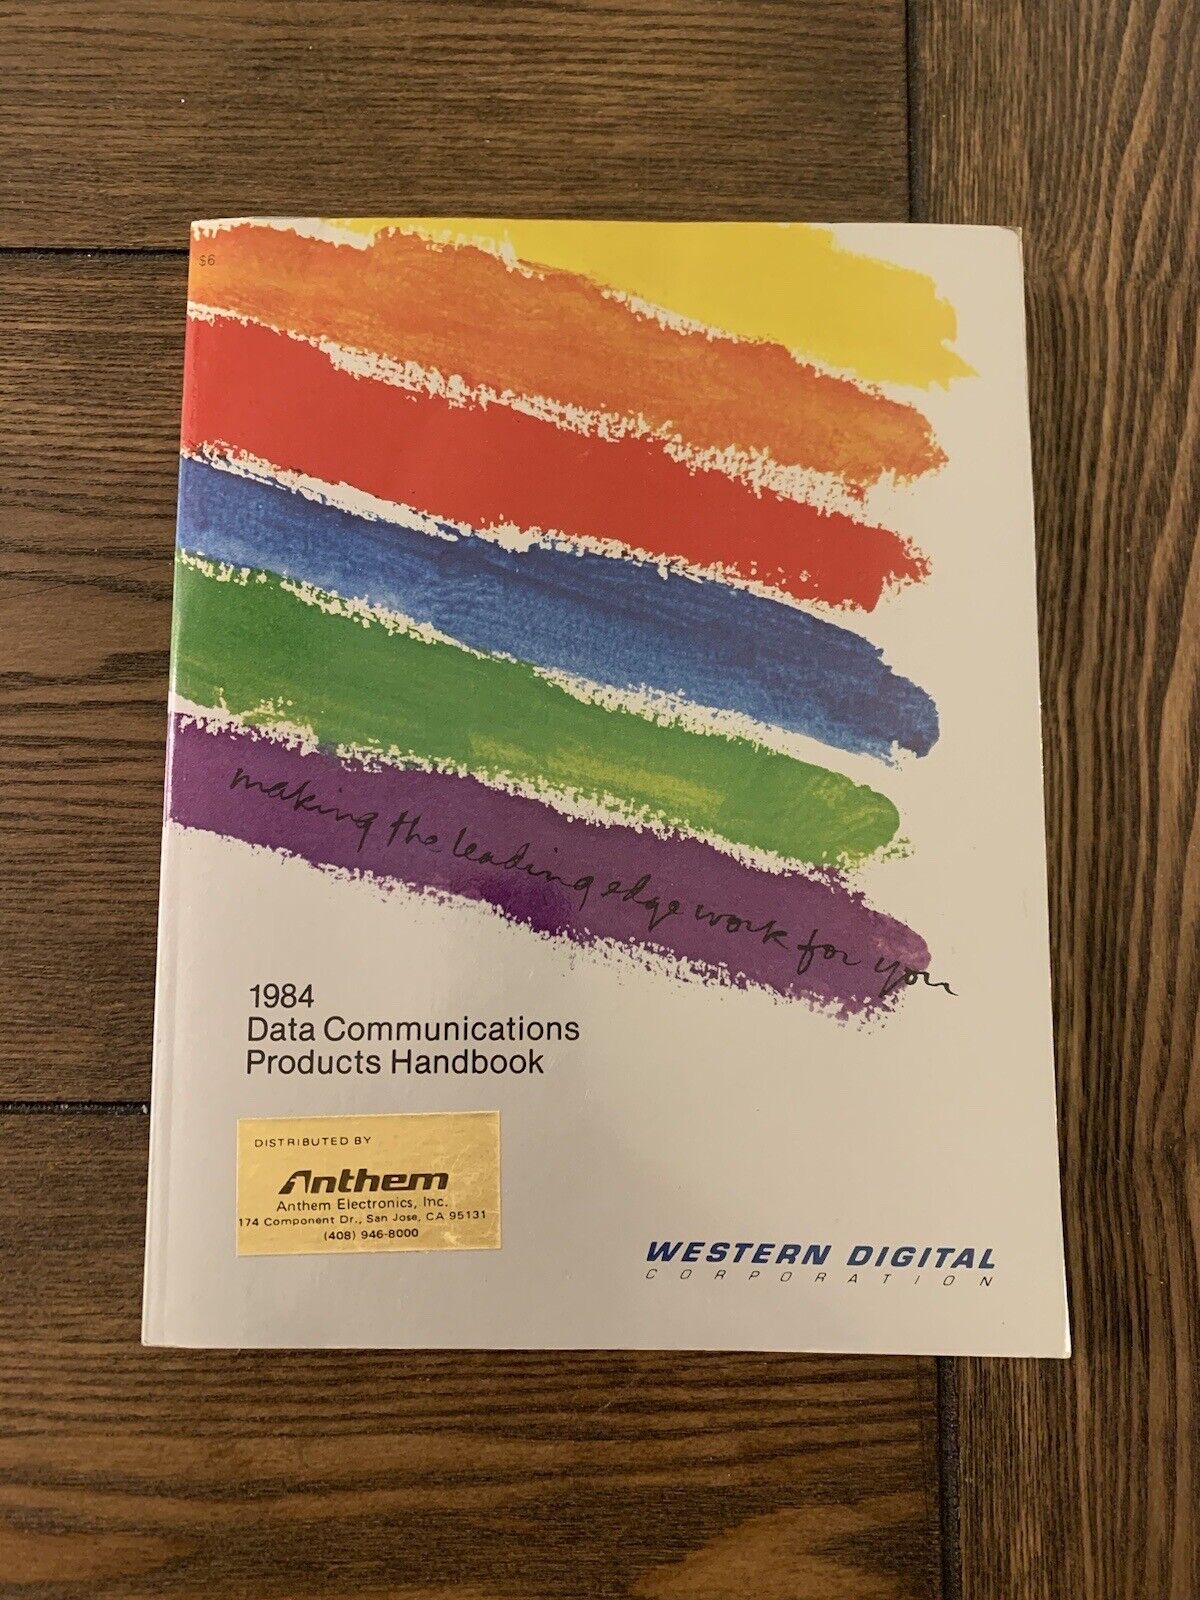 Western Digital 1984 Data Communications Products Handbook